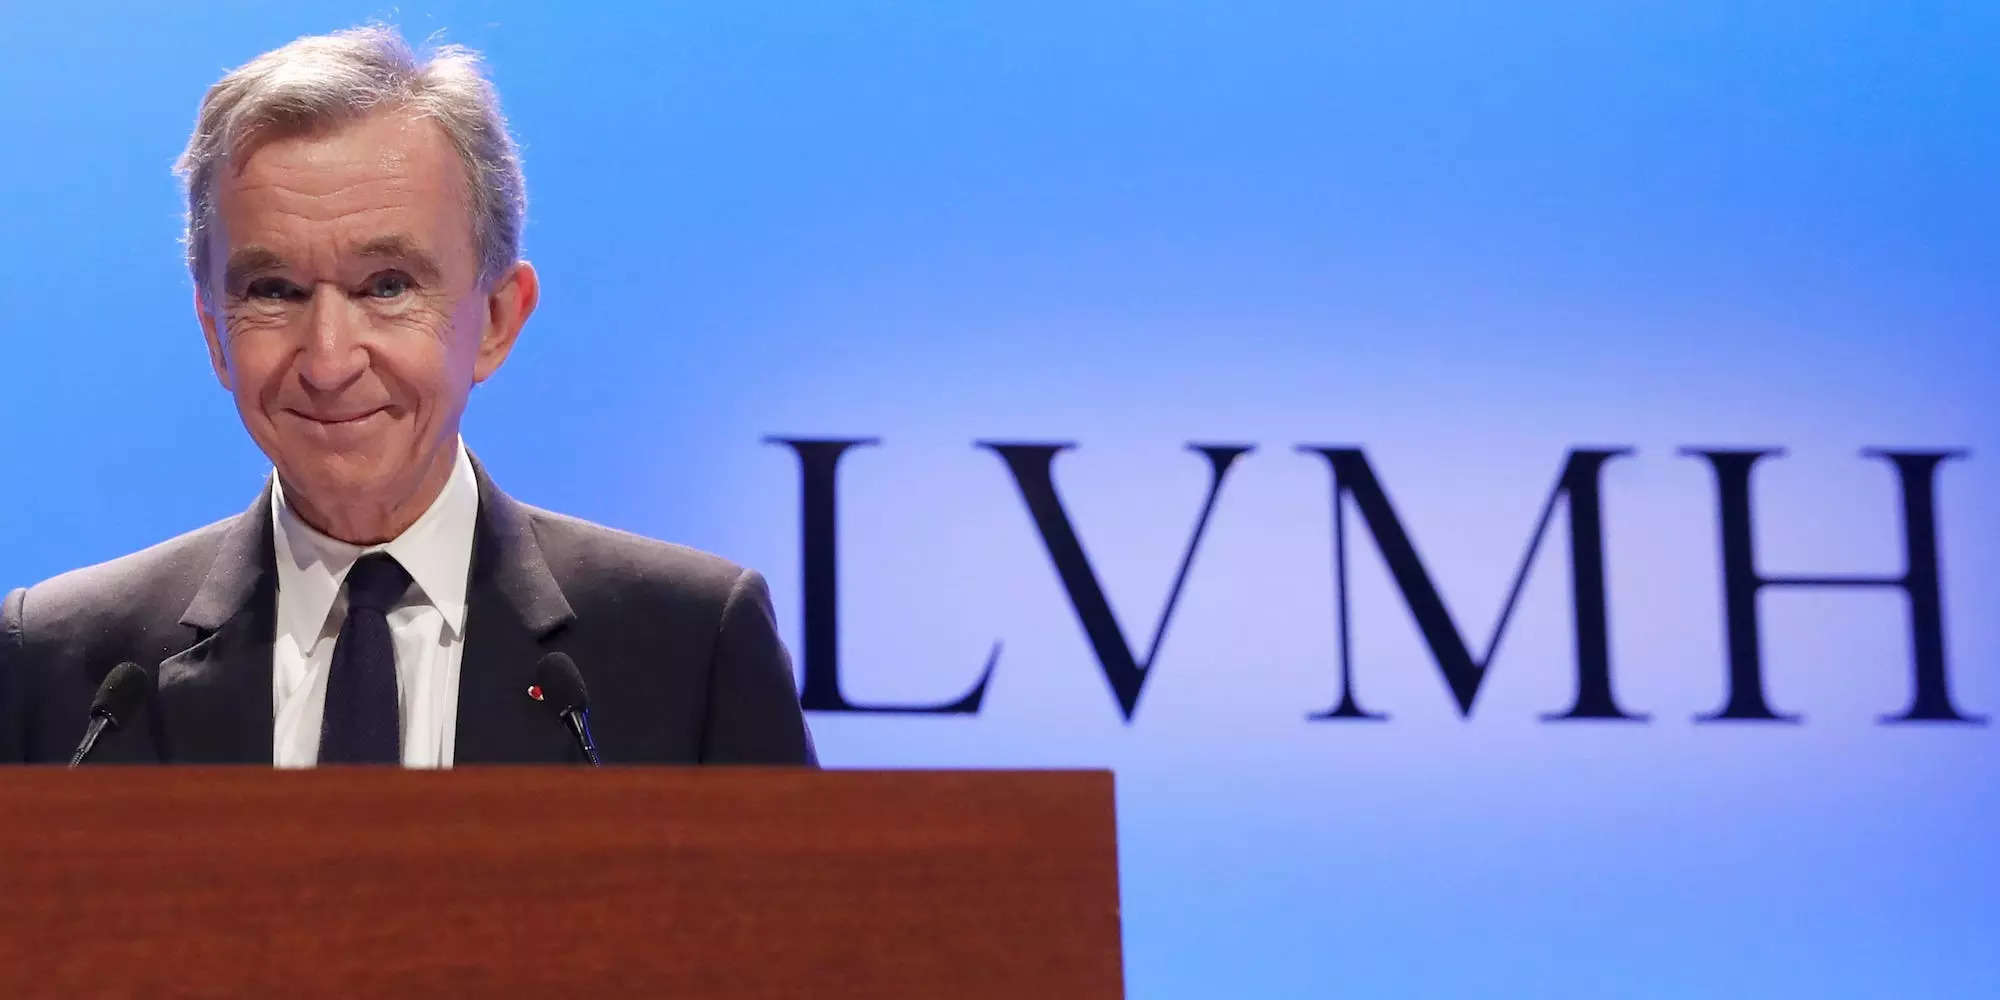 LVMH Head Office Raids Quashed on 'Unfounded' Suspicions - BNN